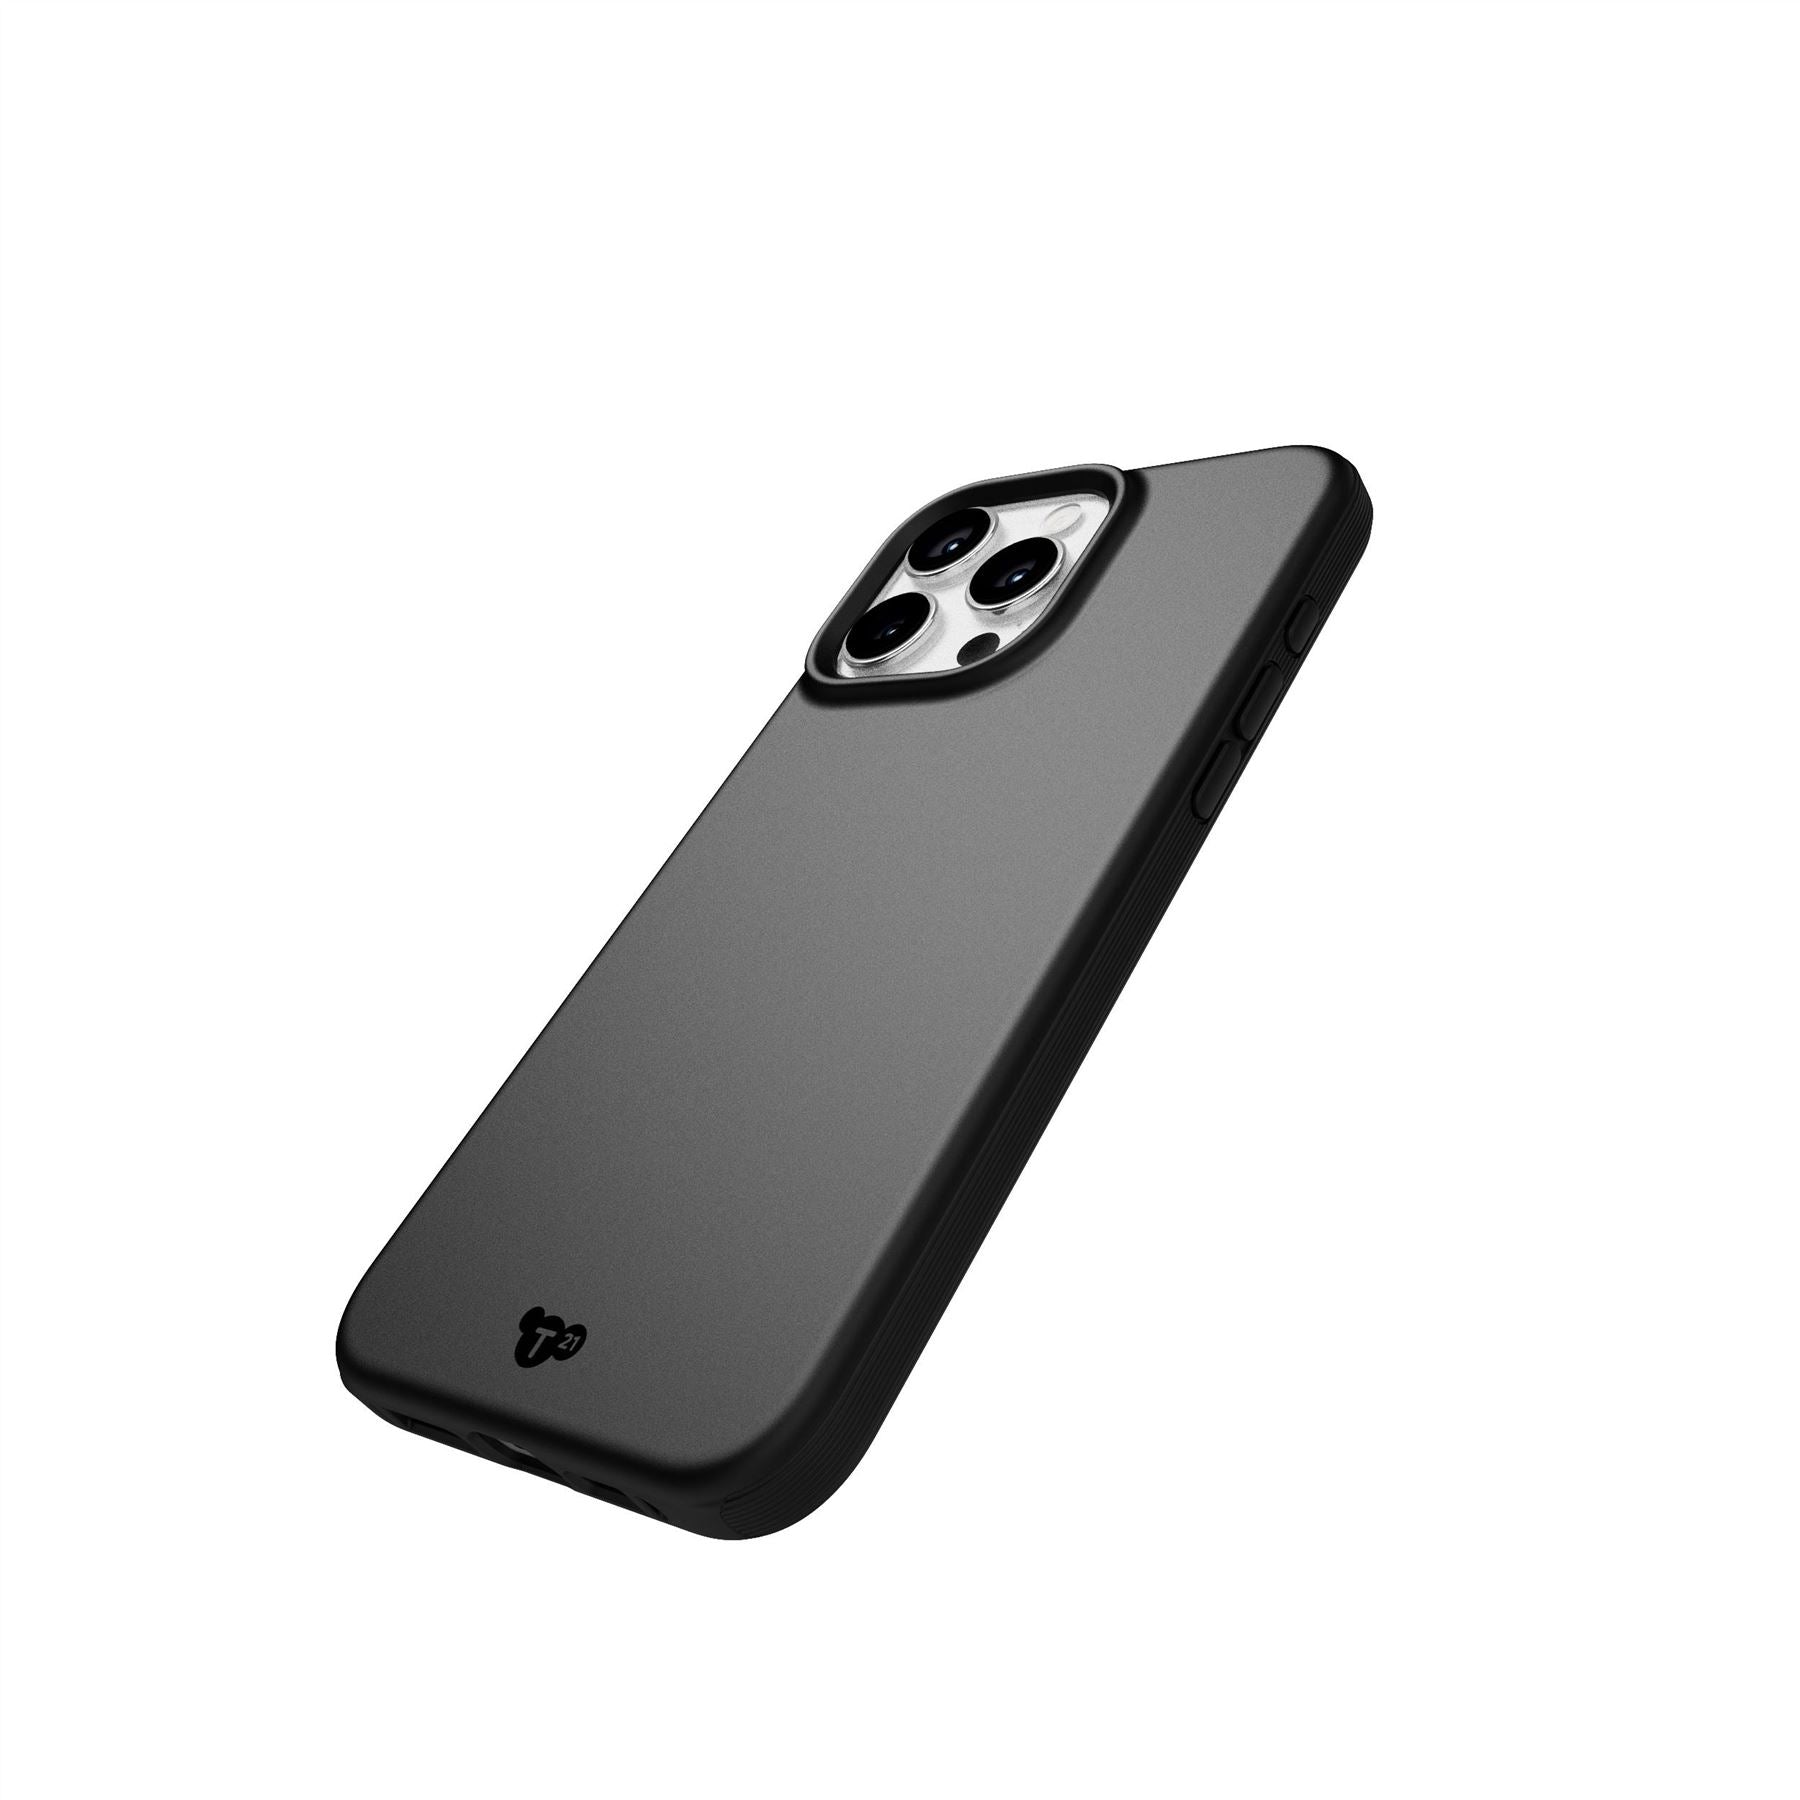 Pro Case - iPhone 15 Pro